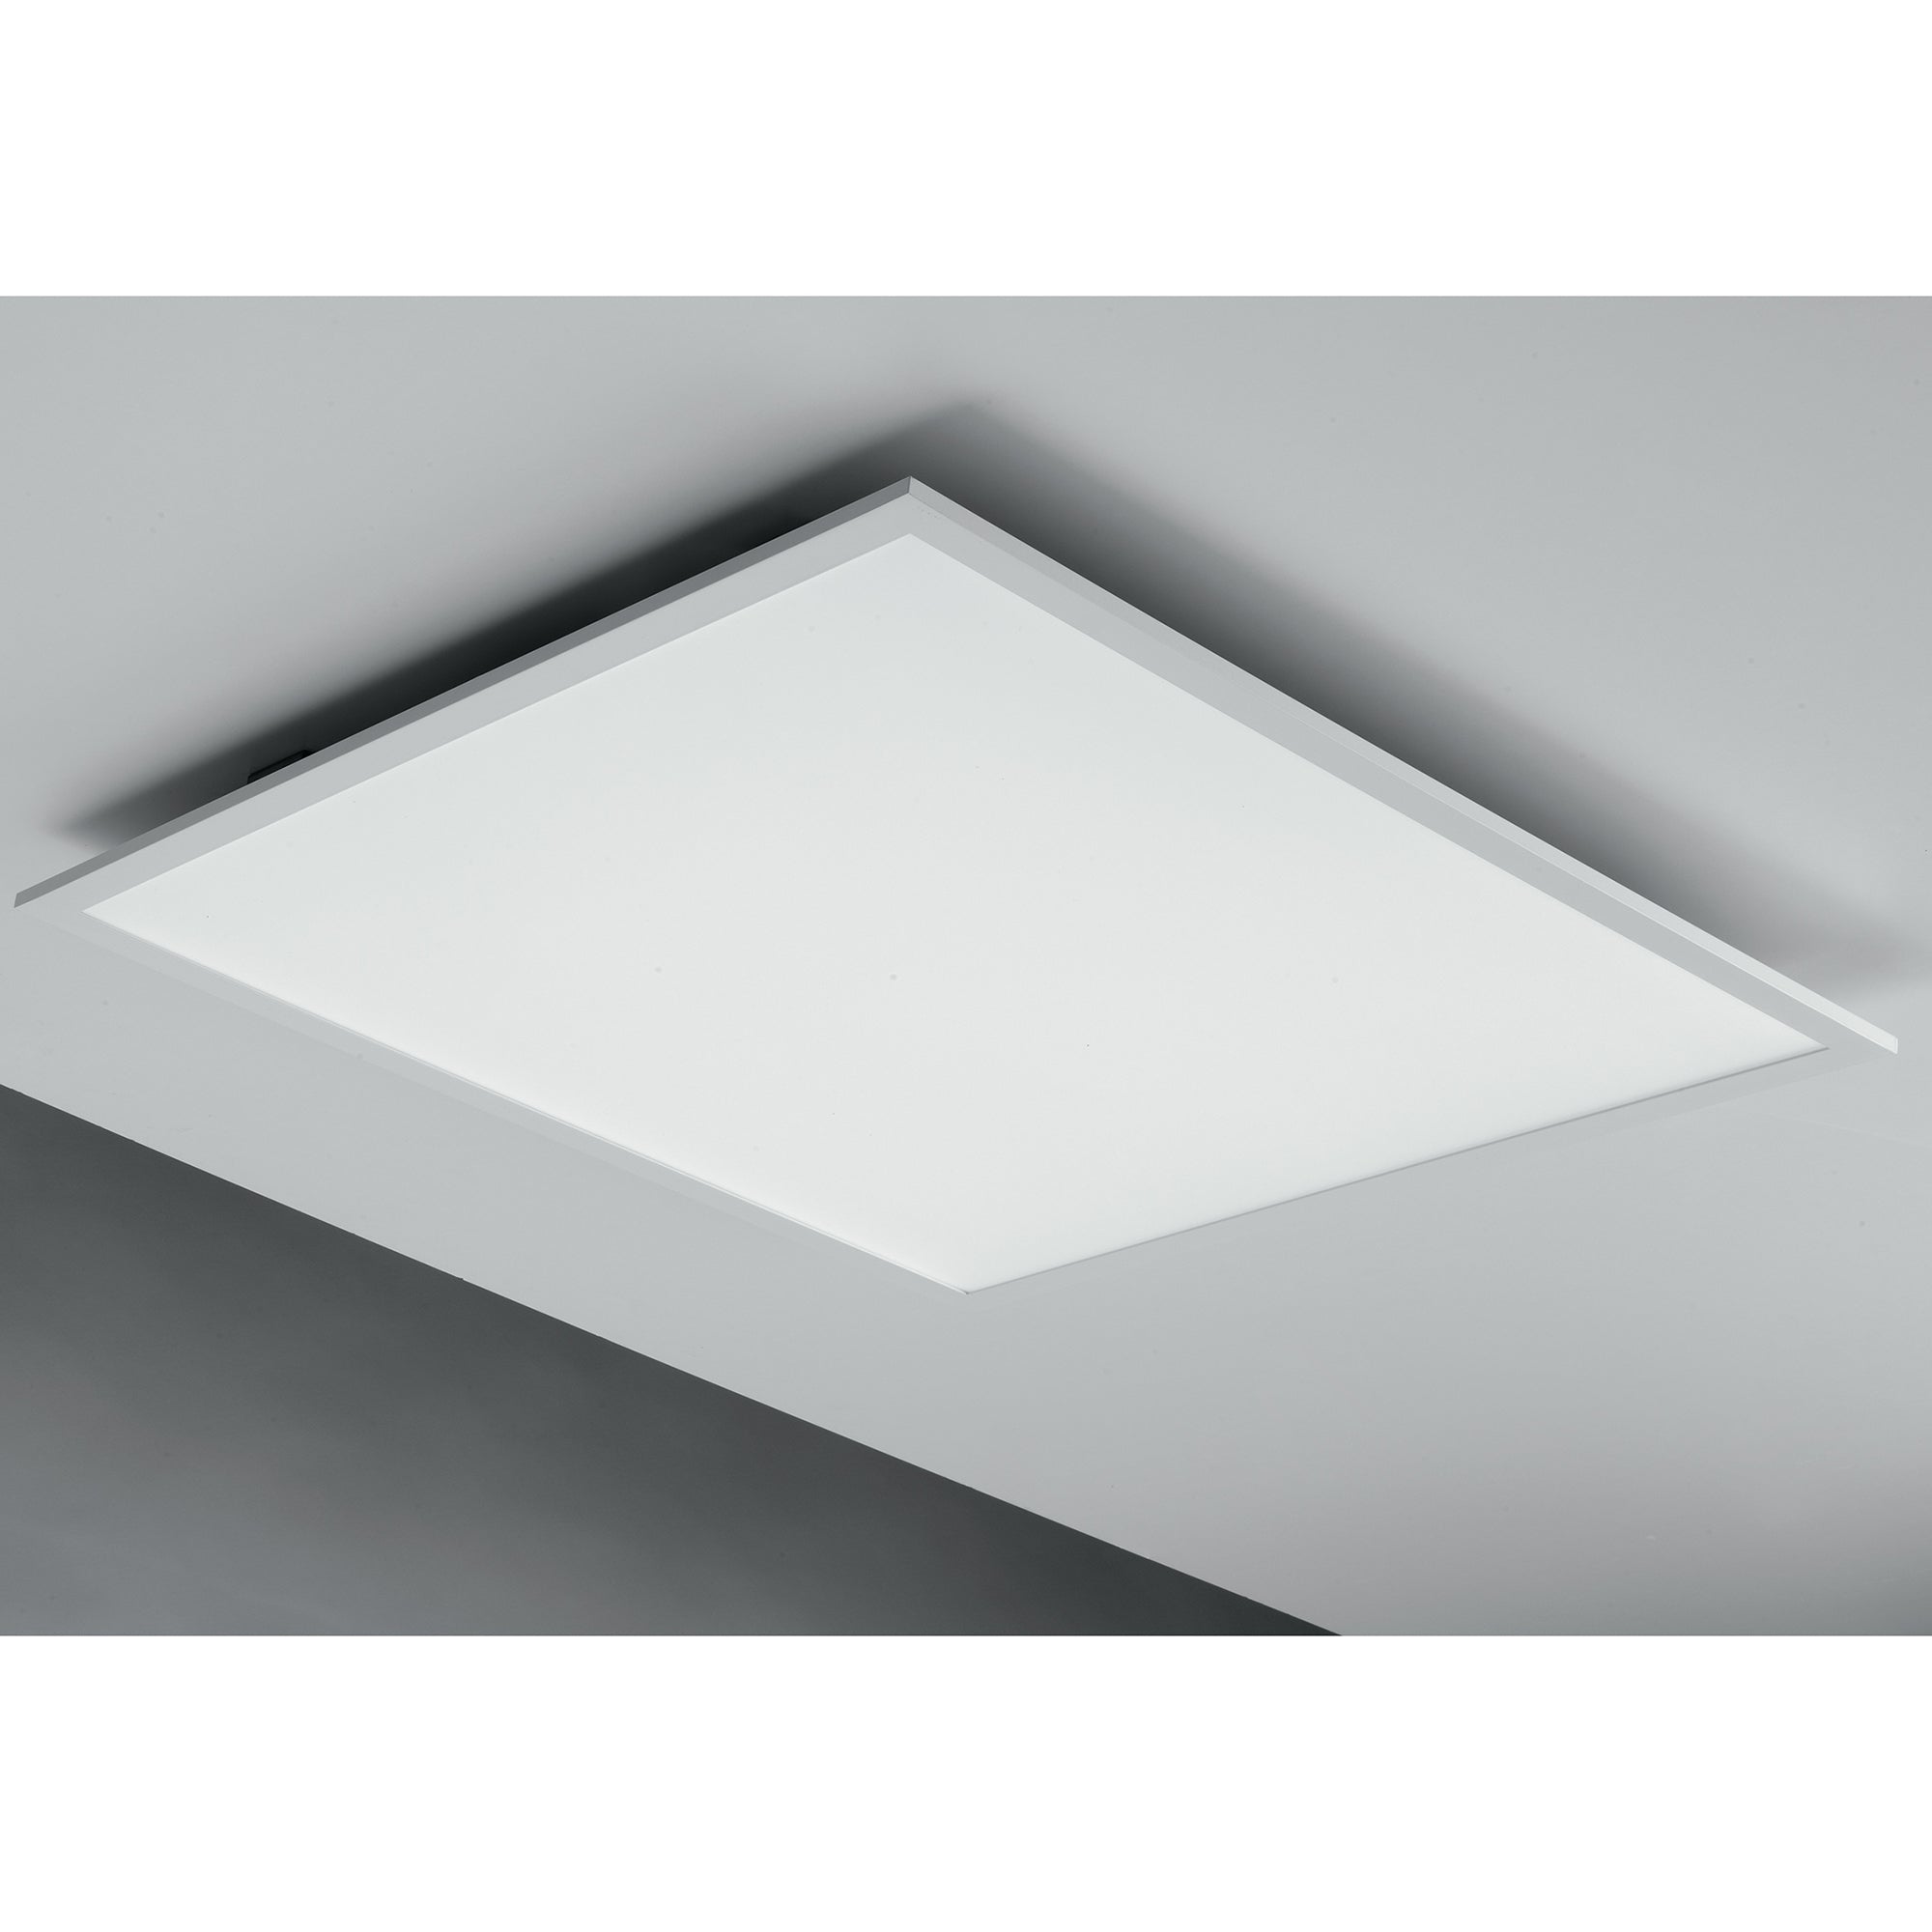 Panel LED de 40W en aluminio blanco con UGR&lt;19 